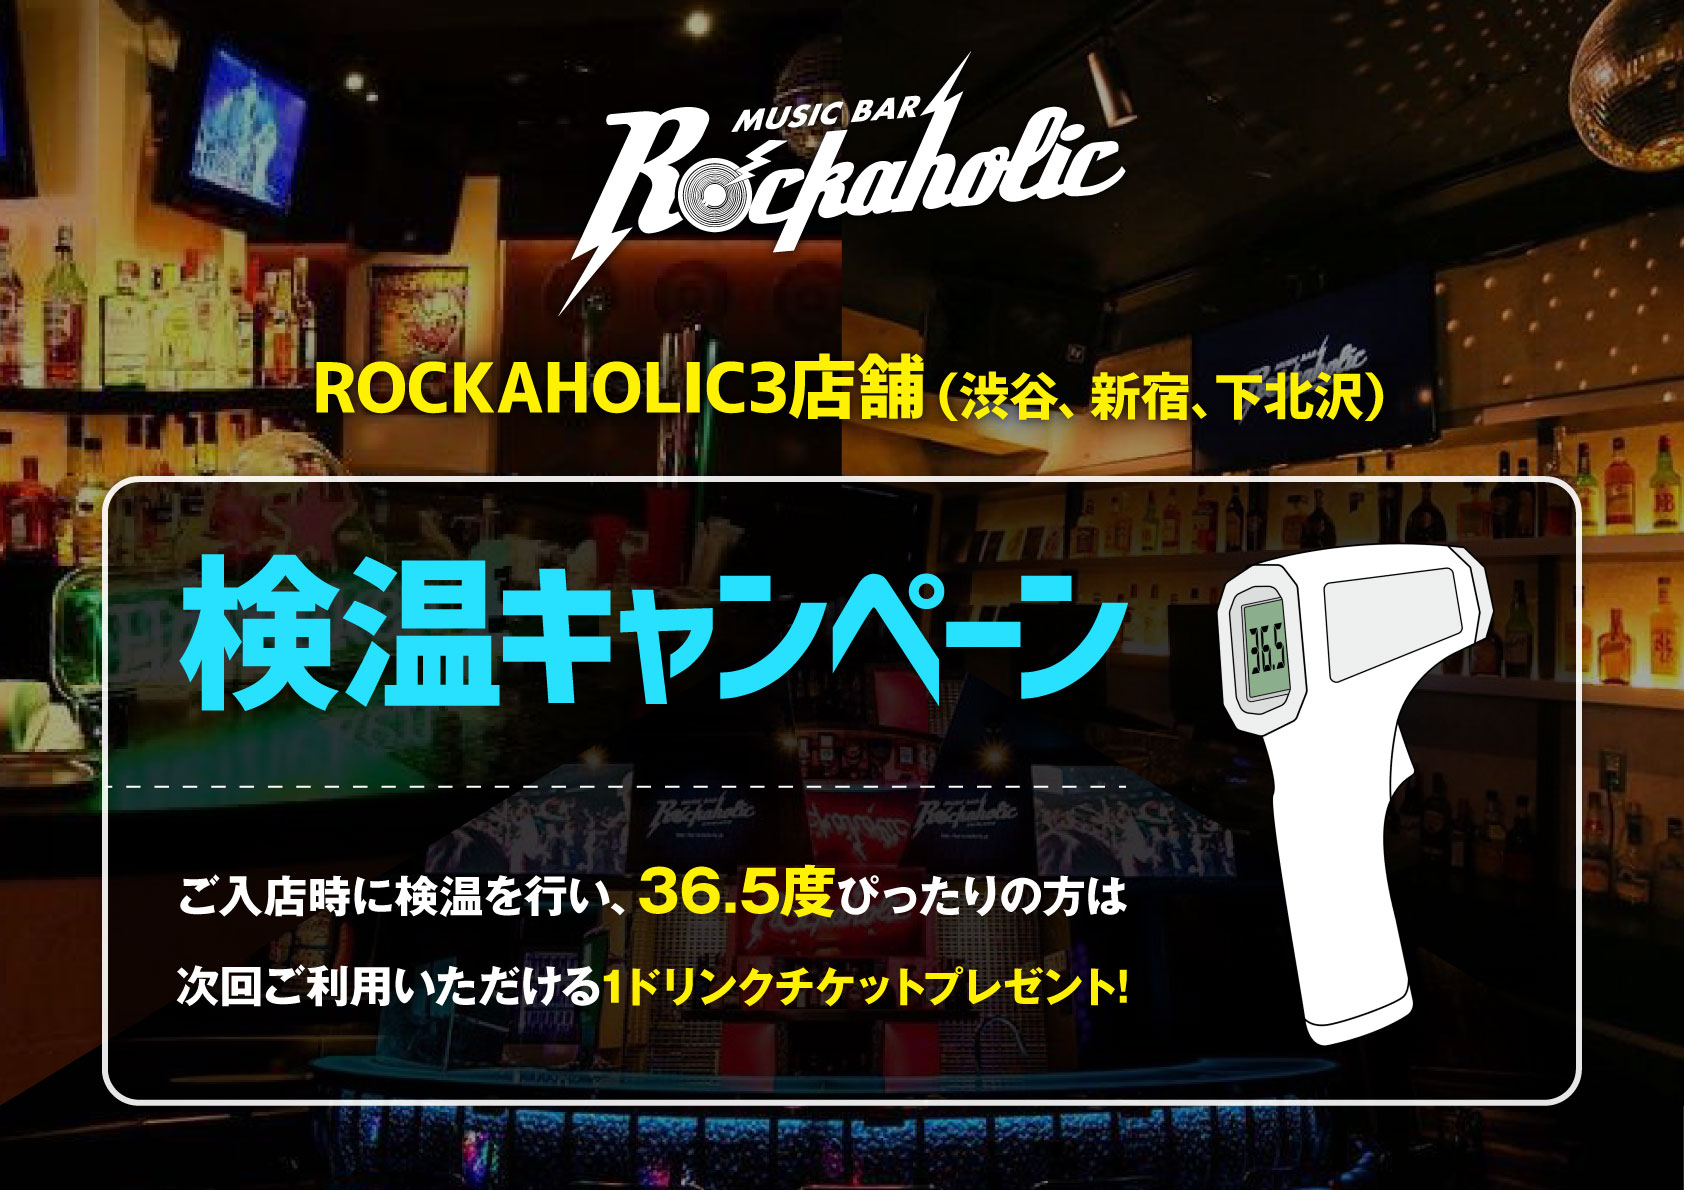 https://bar-rockaholic.jp/shibuya/blog/AF0C0365-1A1C-4DBB-BE8A-7D9B3B034A61.jpeg